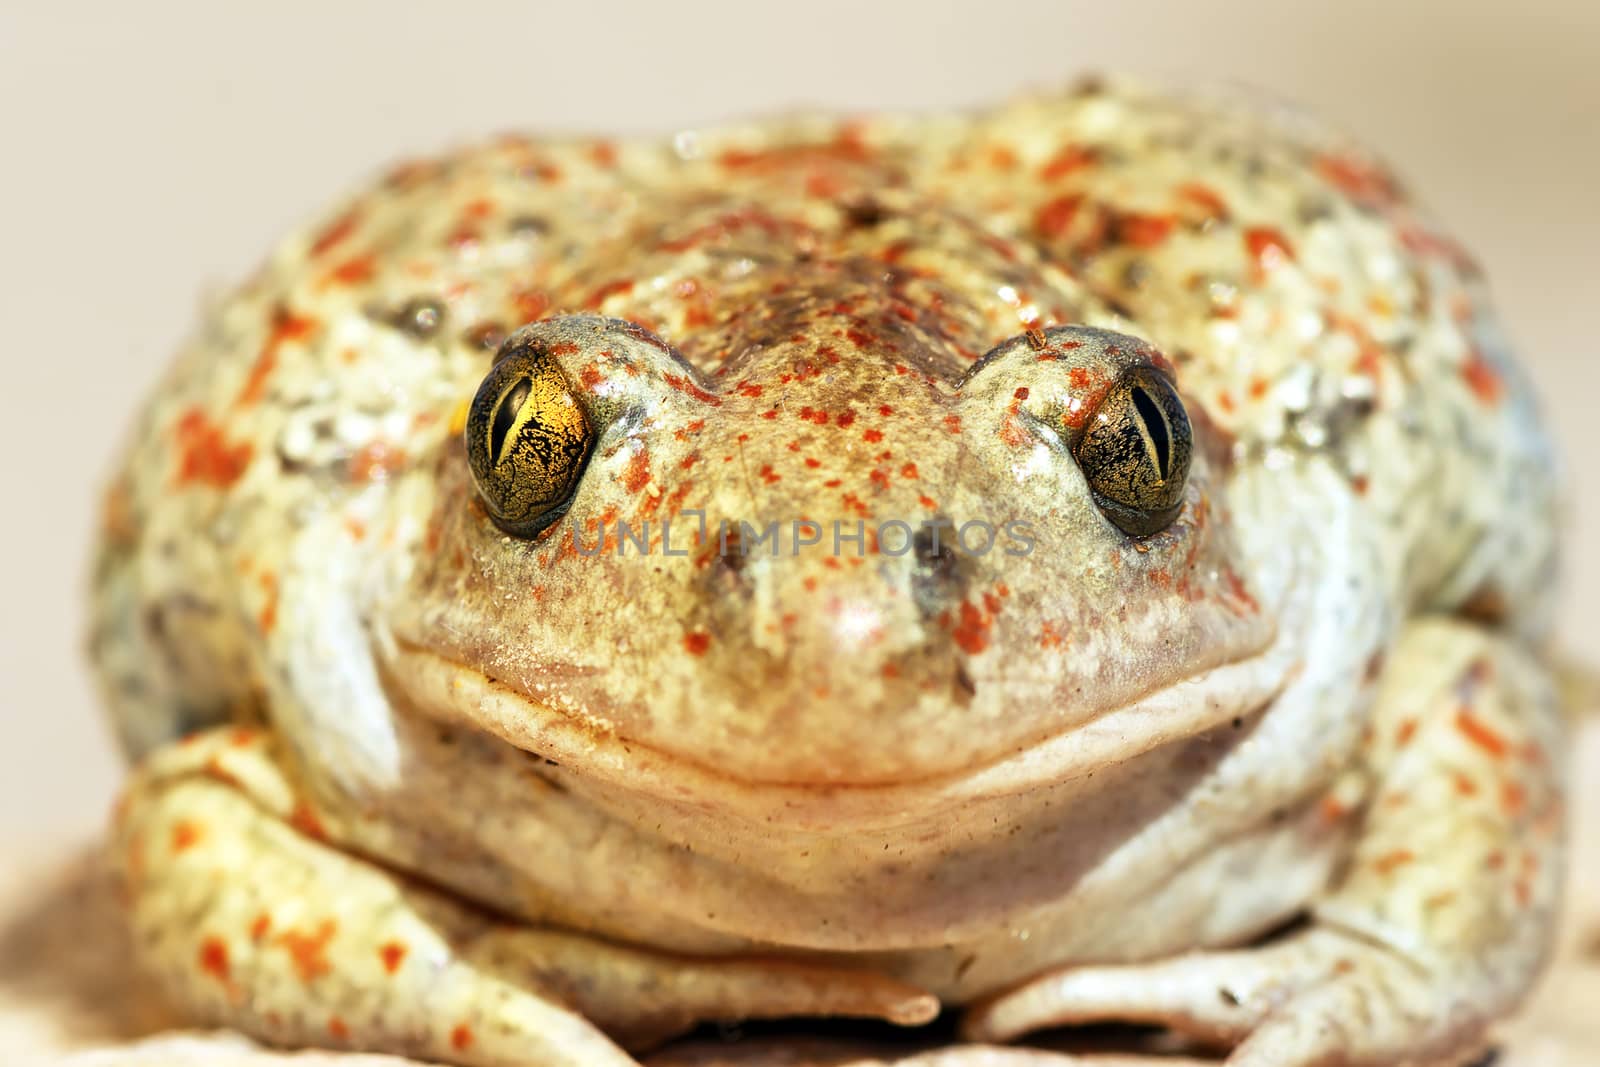 garlic toad beautiful portrait by taviphoto